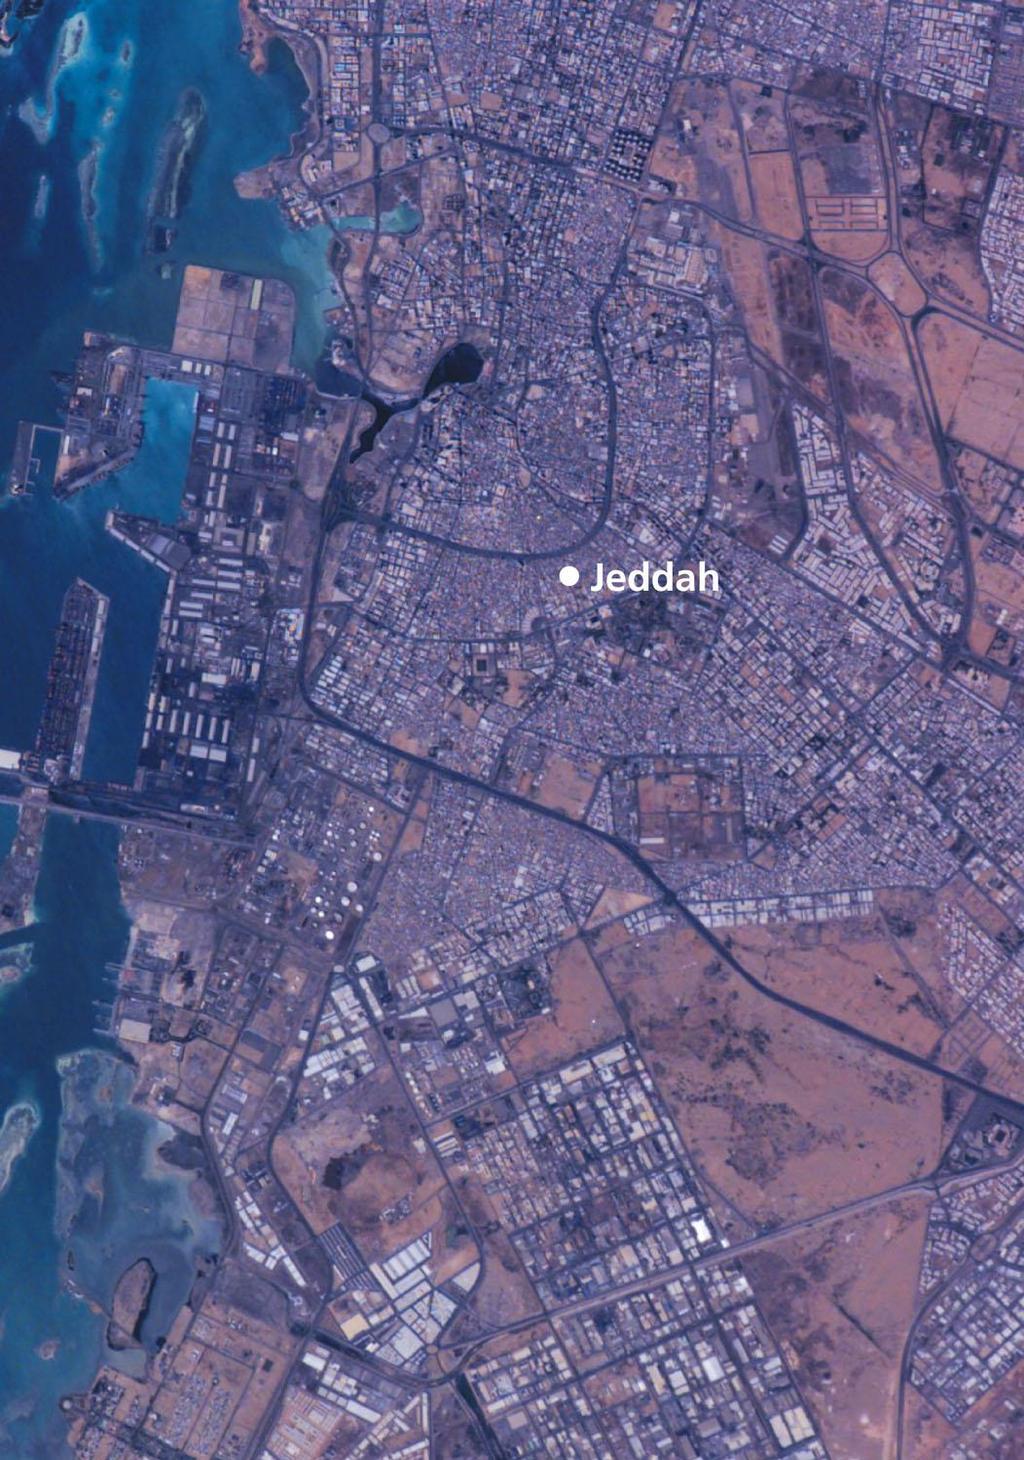 Google Earth Images: Jeddah,